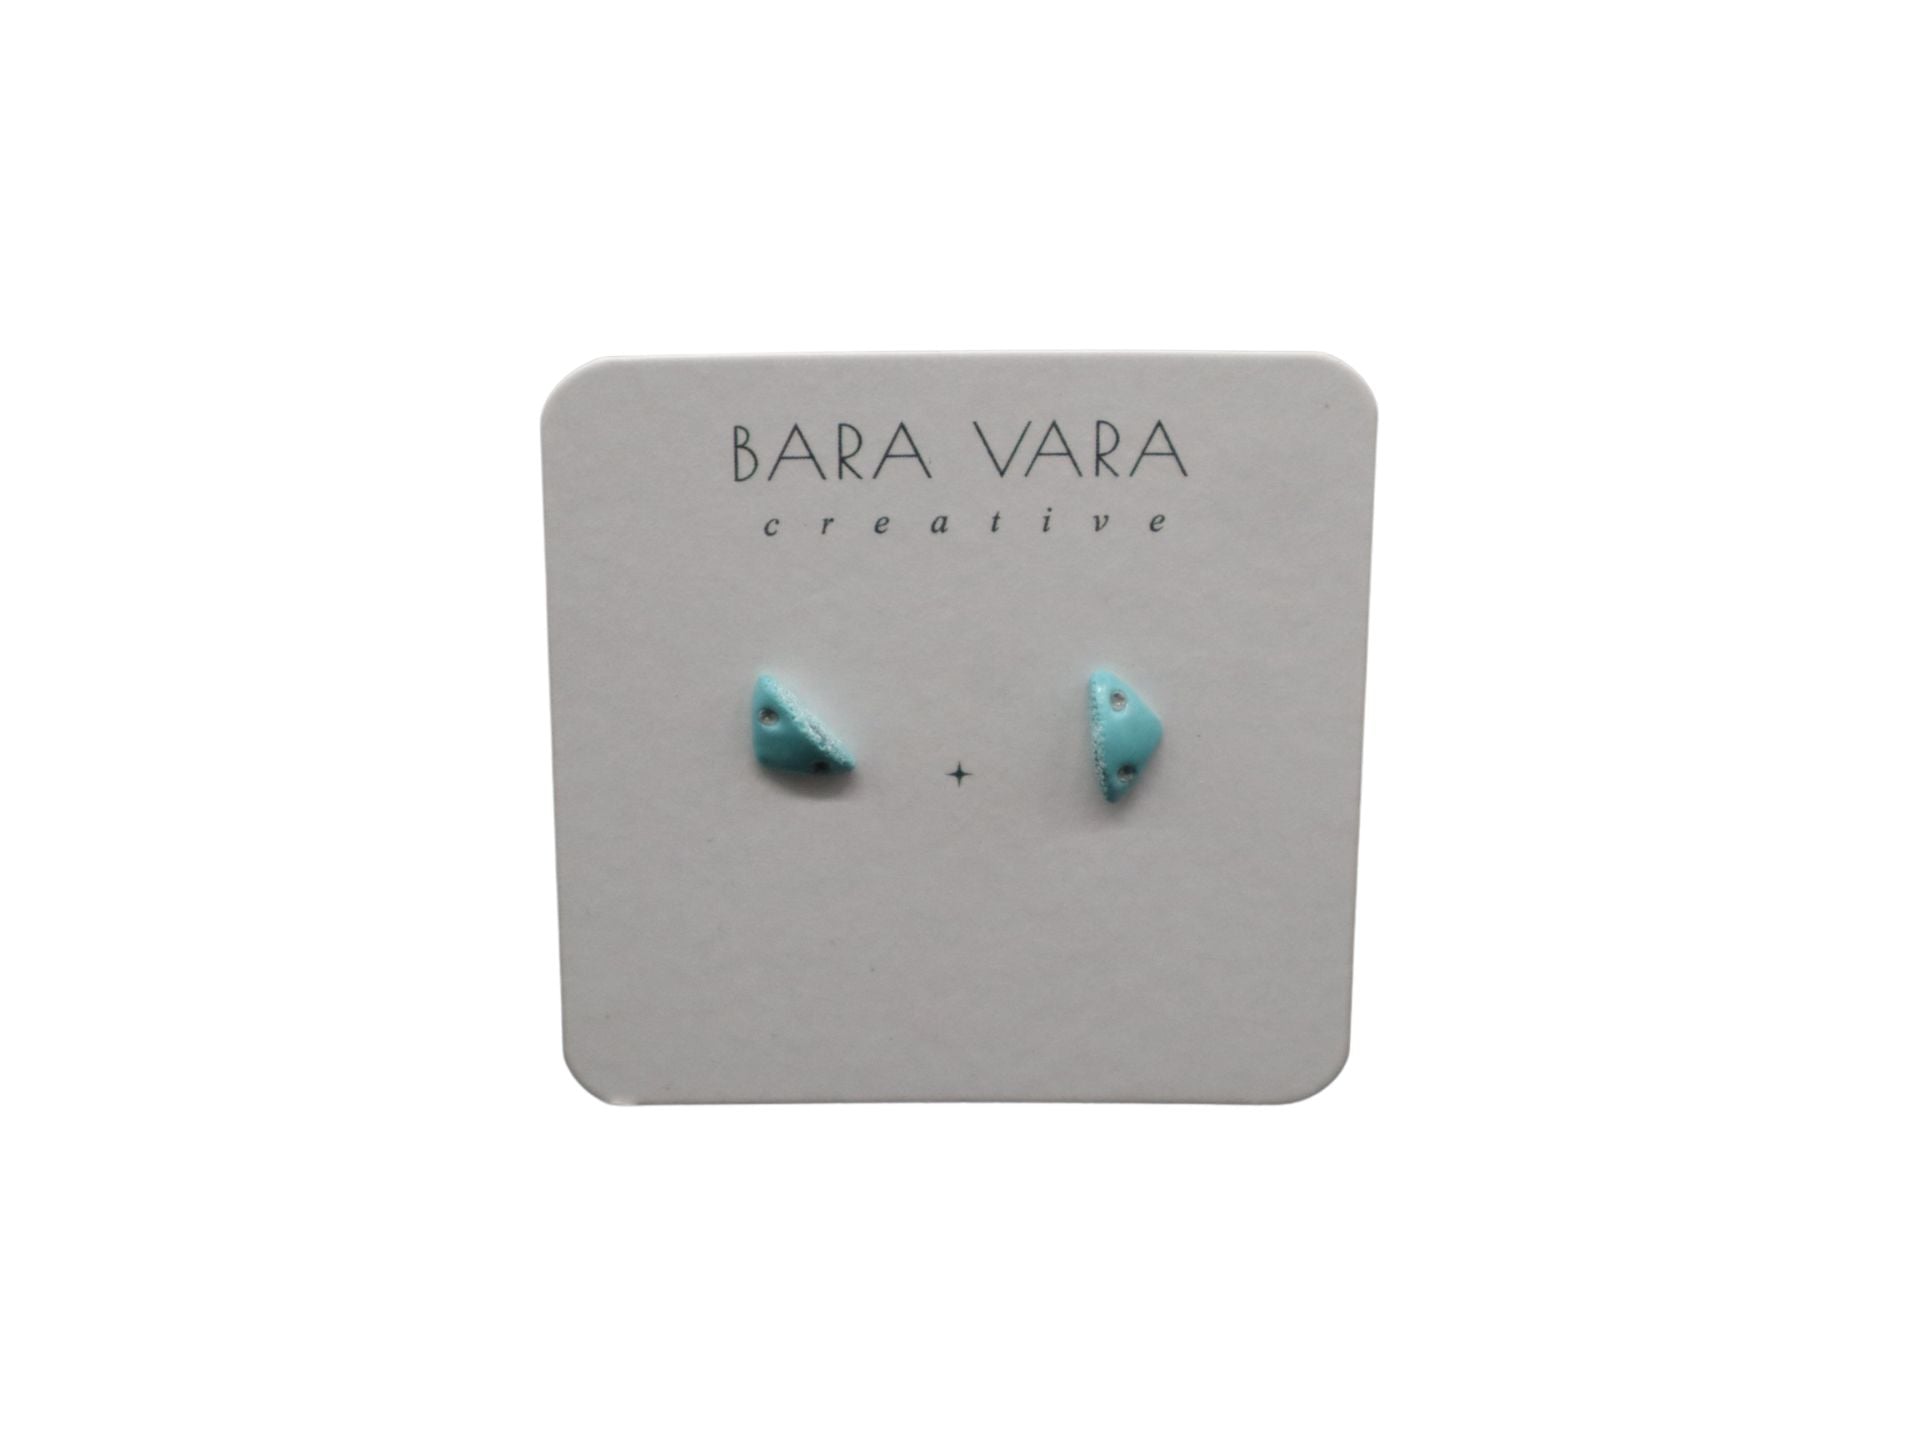 Bara Vara Creative Earrings - Teal Flat Crimp - Happy Biner